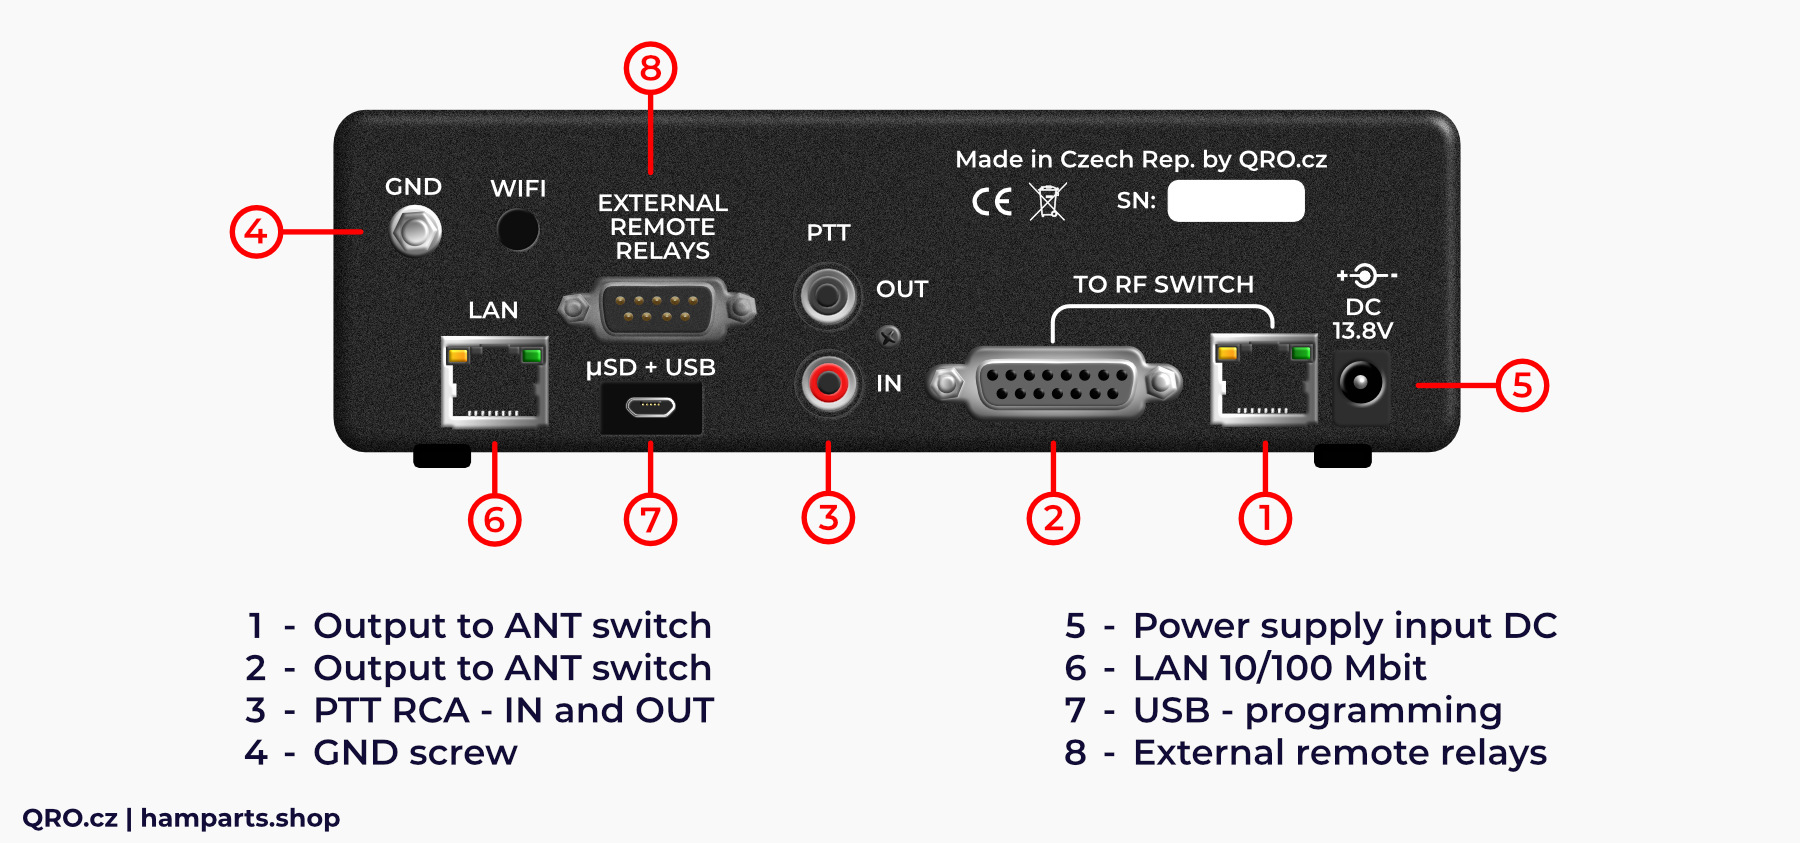 easy controller rear panel description remote version qro.cz hamparts.shop